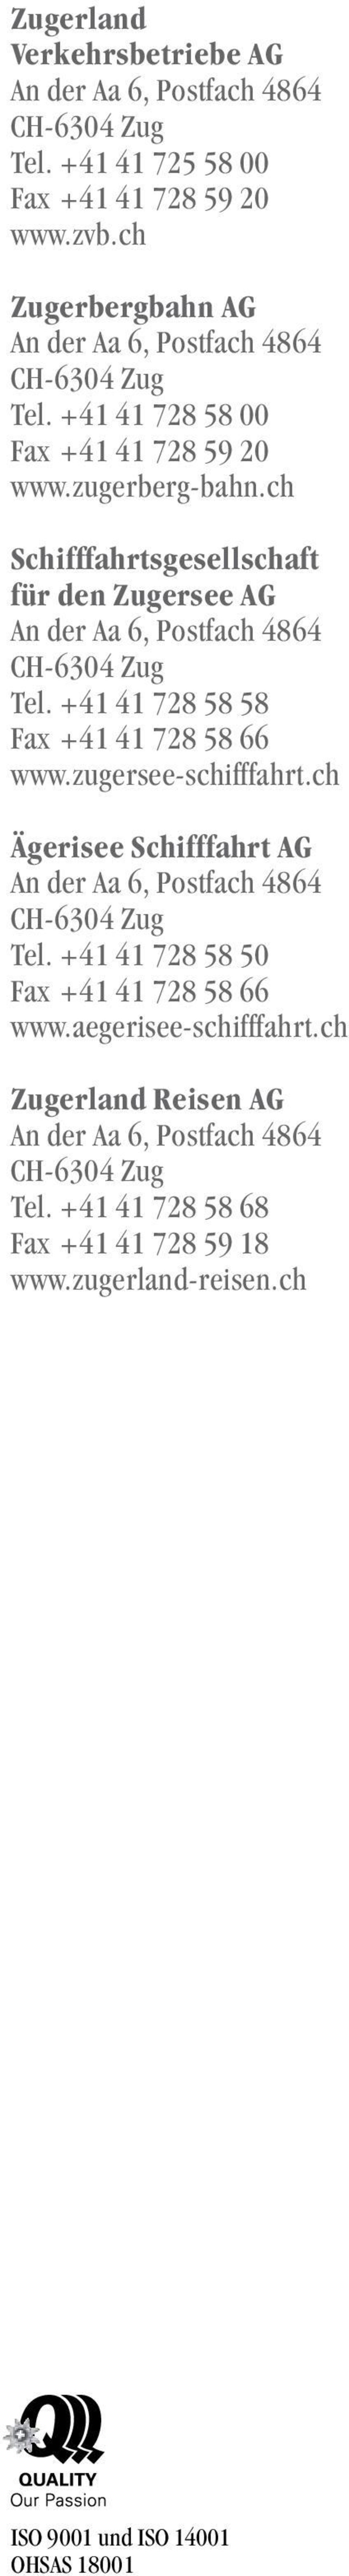 ch Schifffahrtsgesellschaft für den Zugersee AG An der Aa 6, Postfach 4864 CH-6304 Zug Tel. +41 41 728 58 58 Fax +41 41 728 58 66 www.zugersee-schifffahrt.